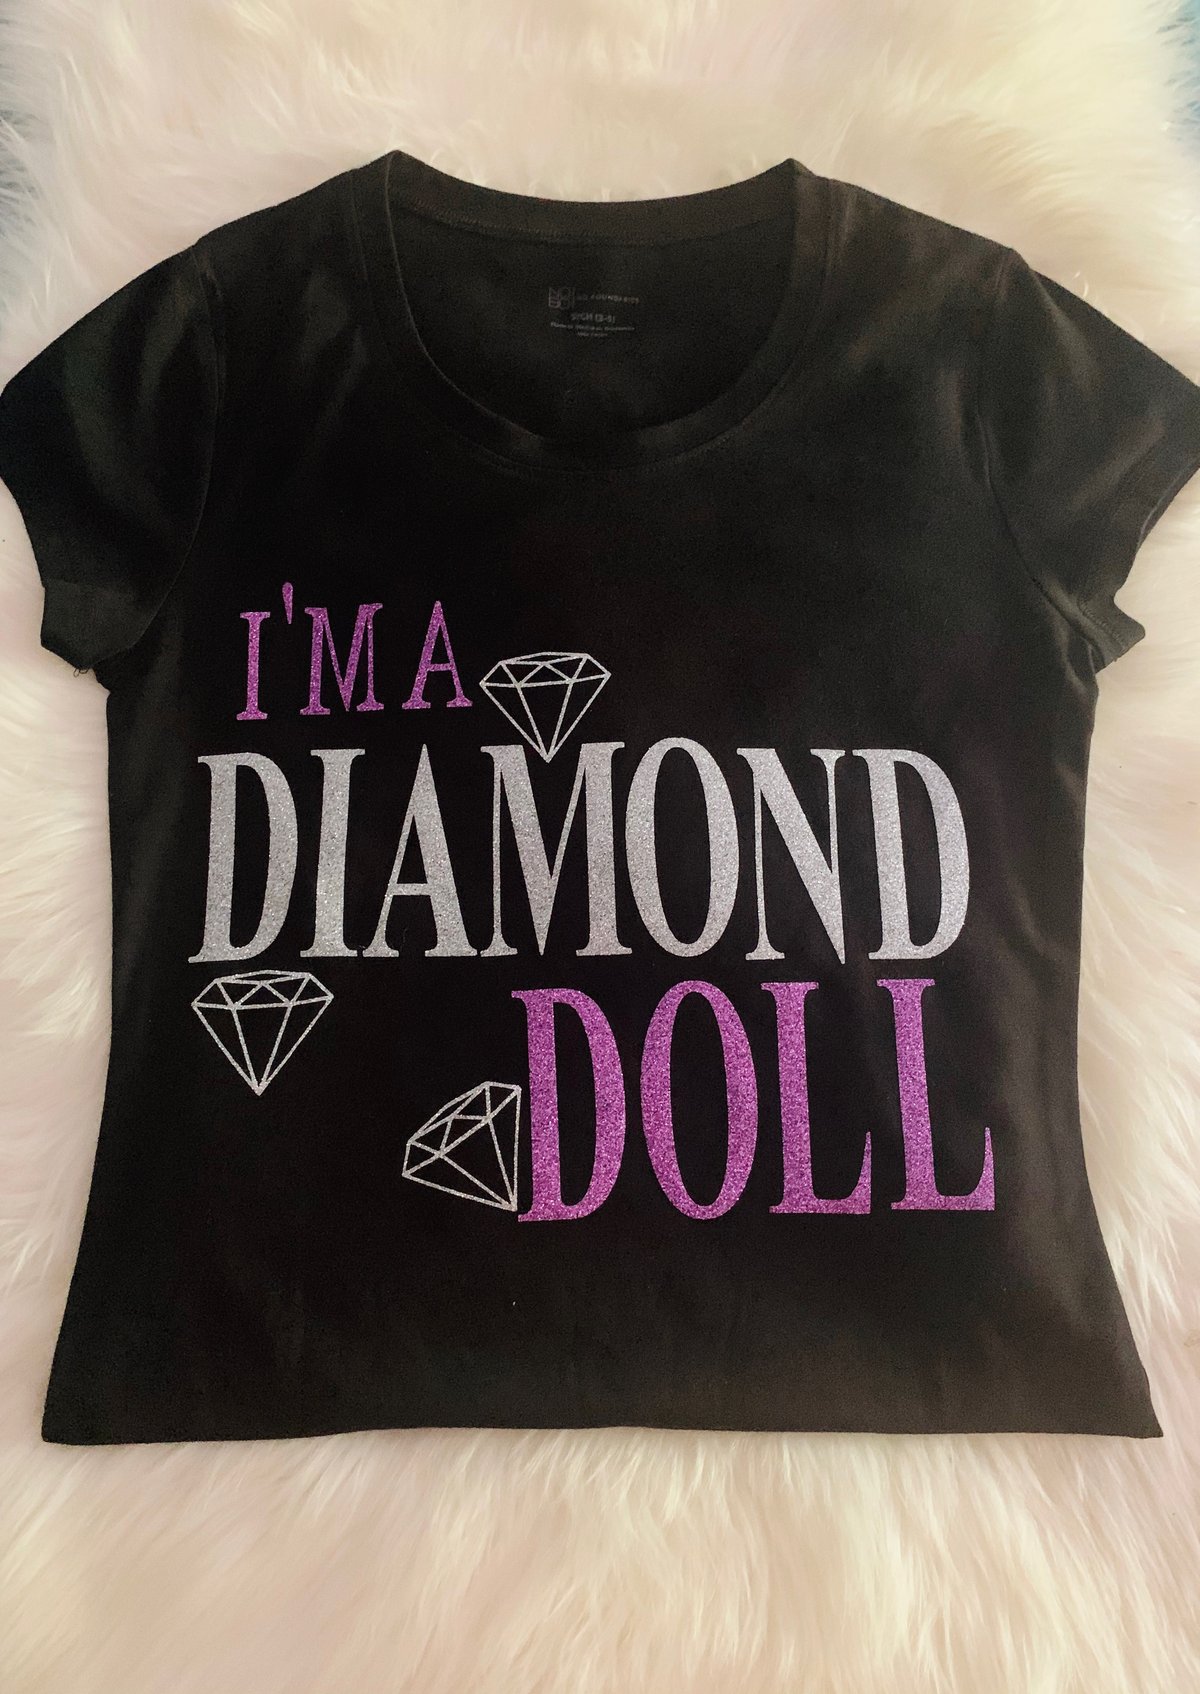 Diamond doll pics